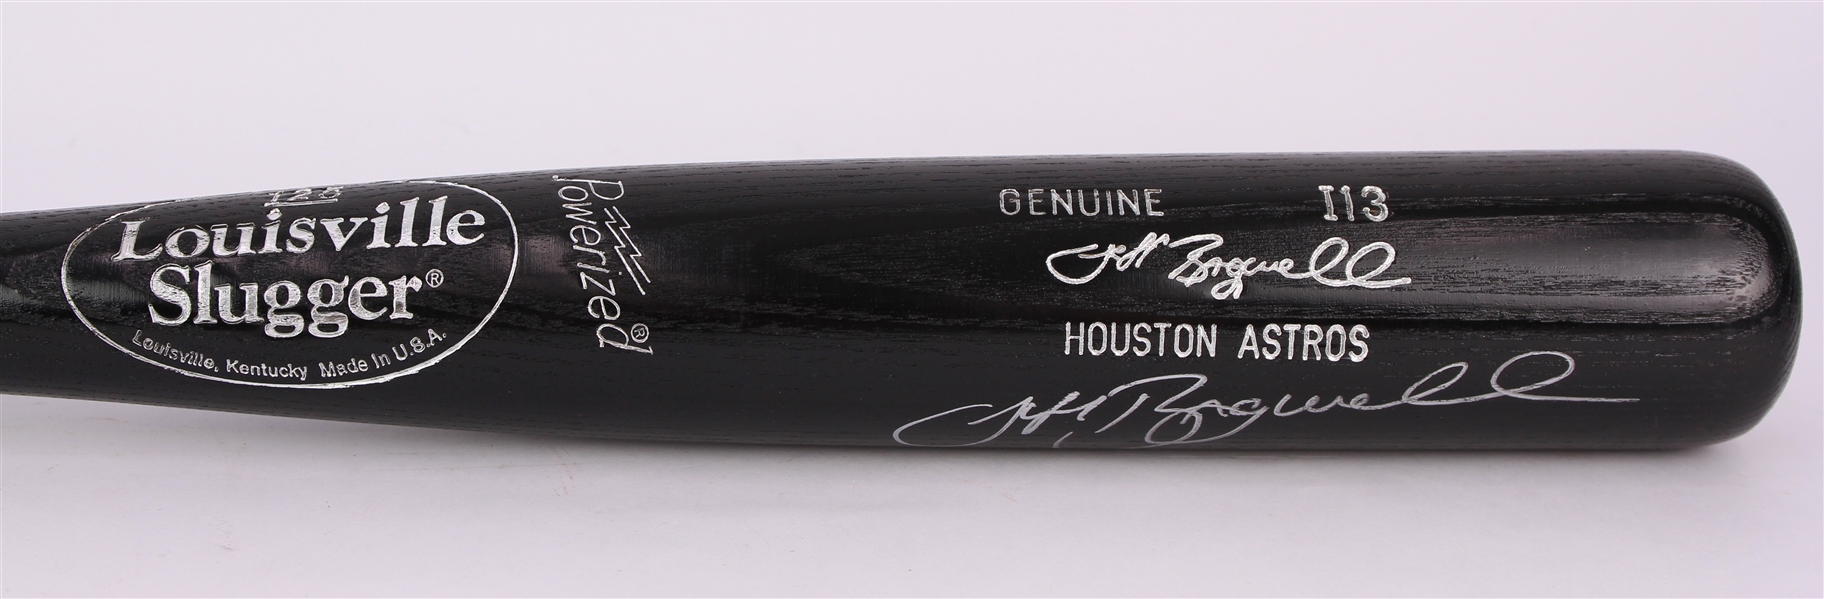 1991-97 Jeff Bagwell Houston Astros Signed Louisville Slugger Bat (JSA)